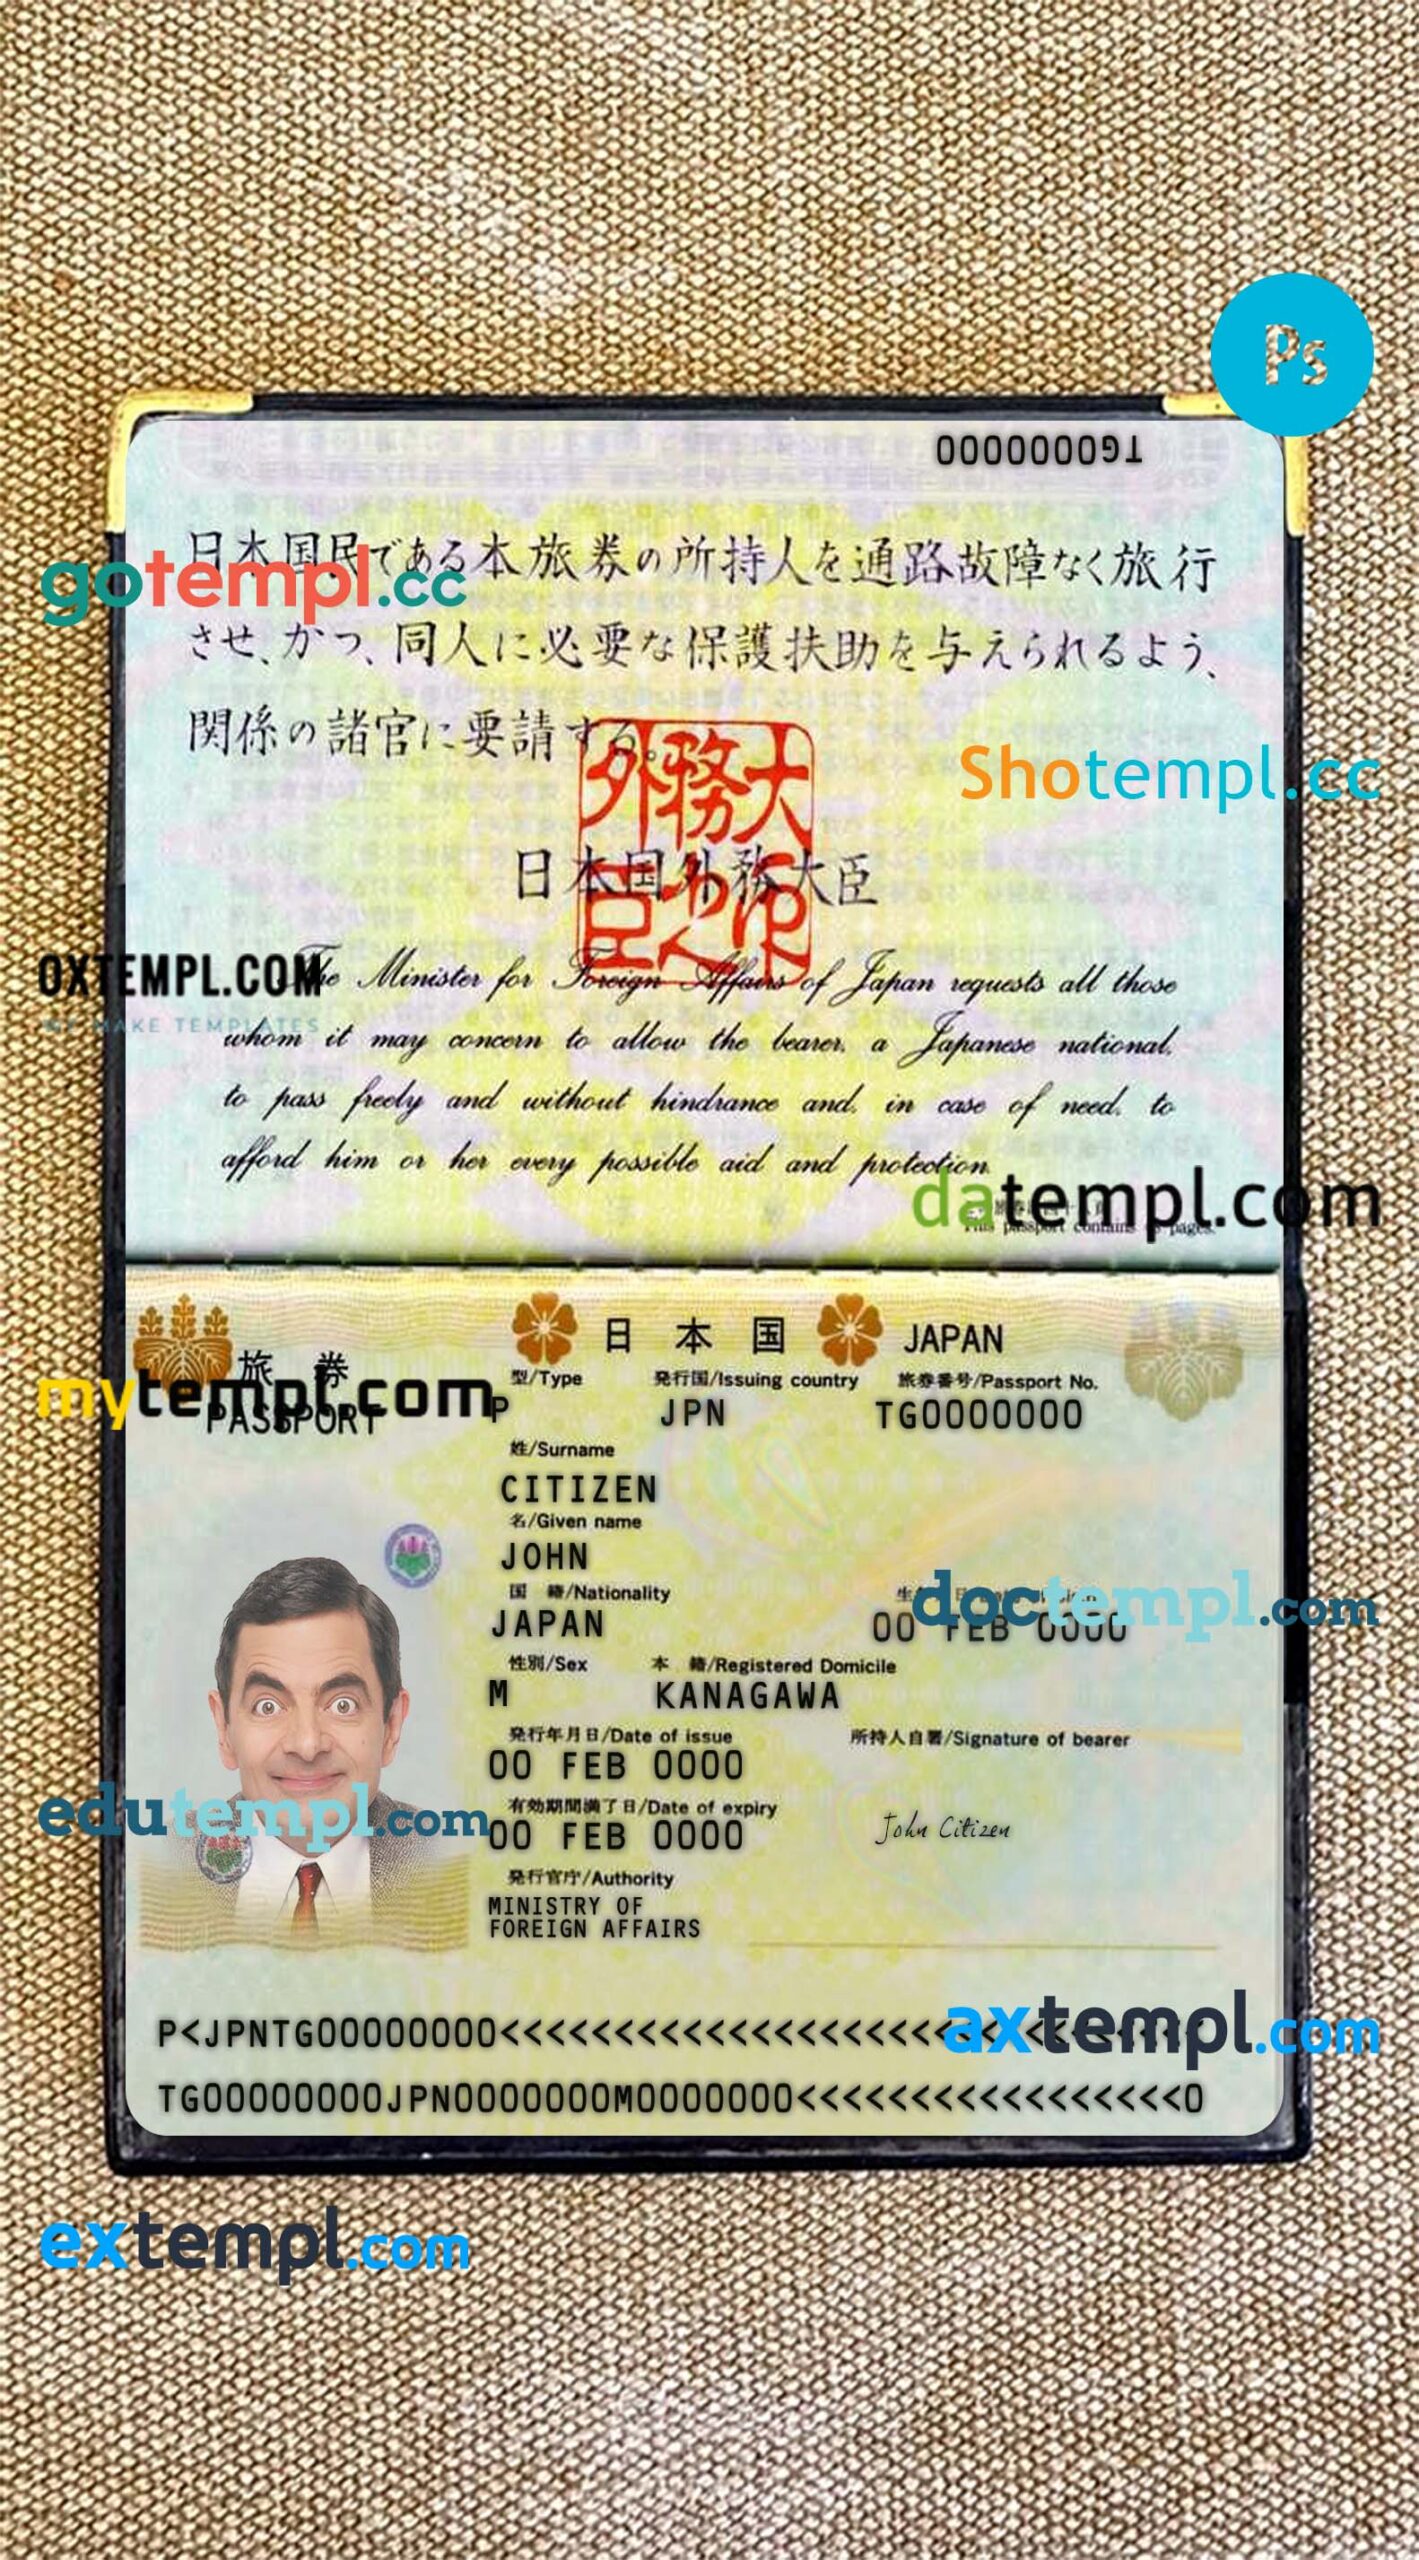 Venezuela passport PSD files, scan and photo look templates, 2 in 1